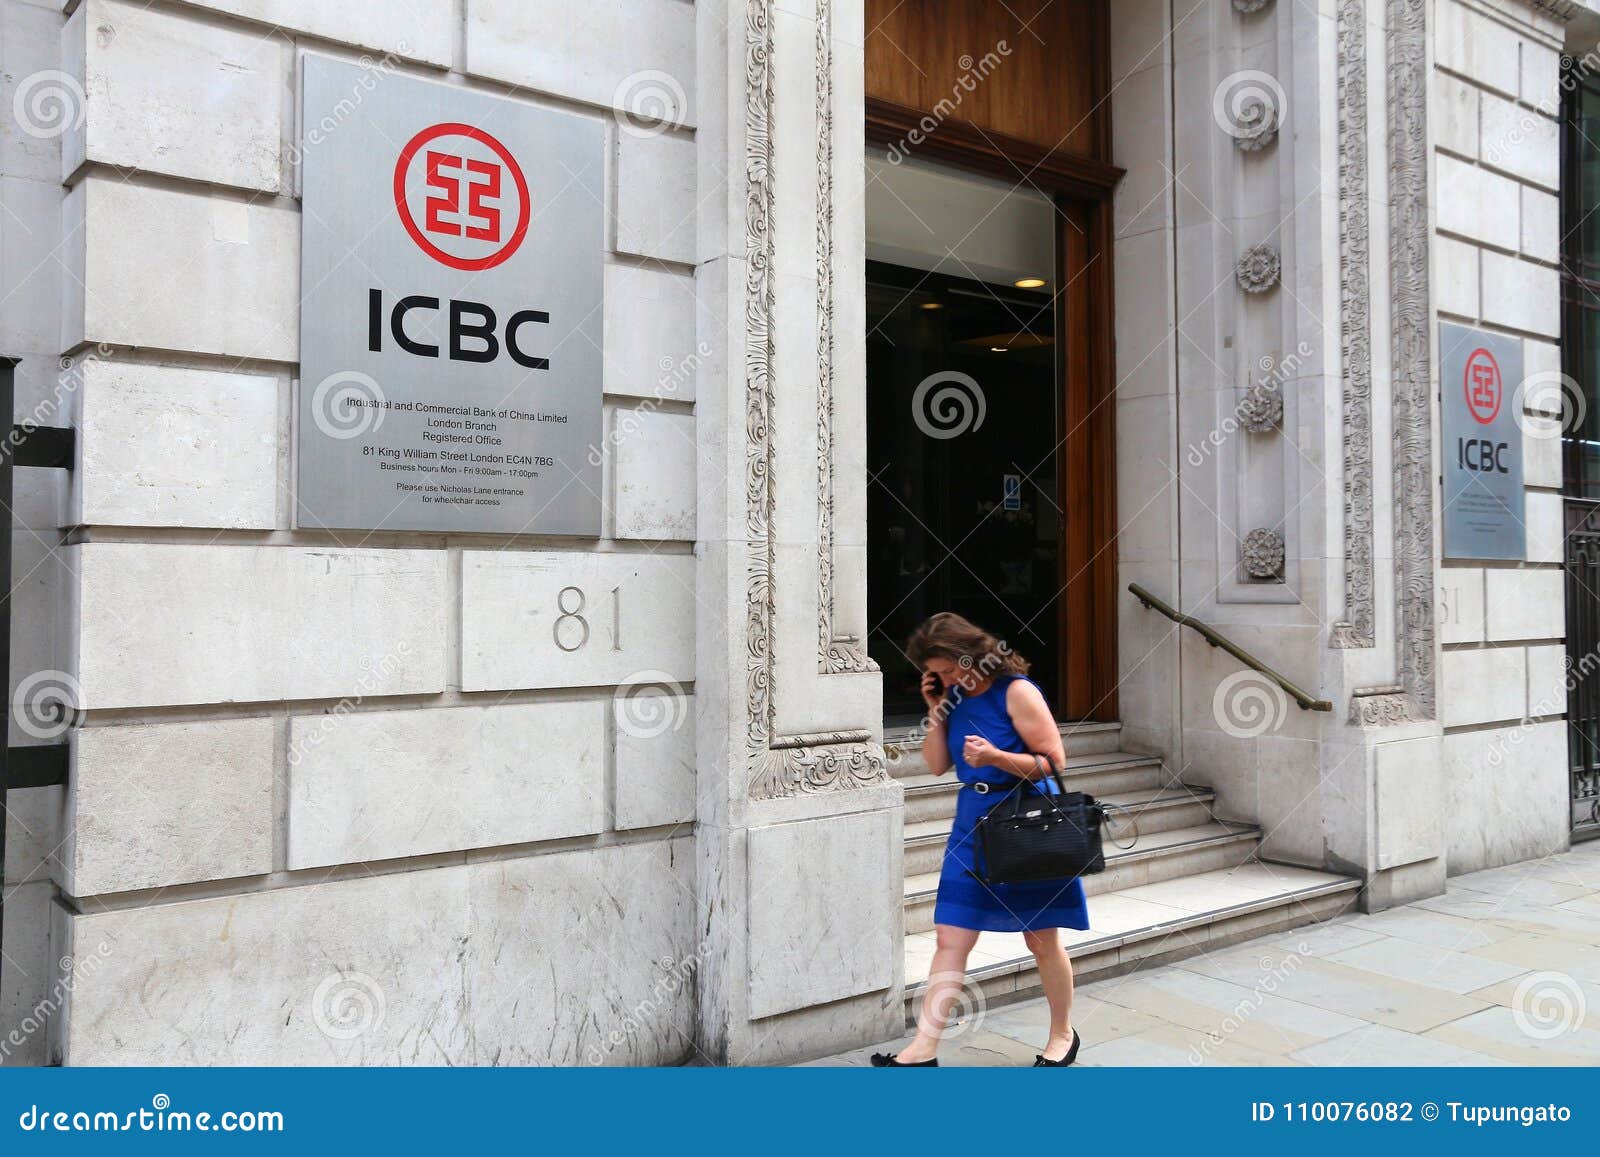 Айсибиси банк сайт. ICBC банк Китая. ICBC главной офис. Коммерческие банки Китая. ICBC logo.